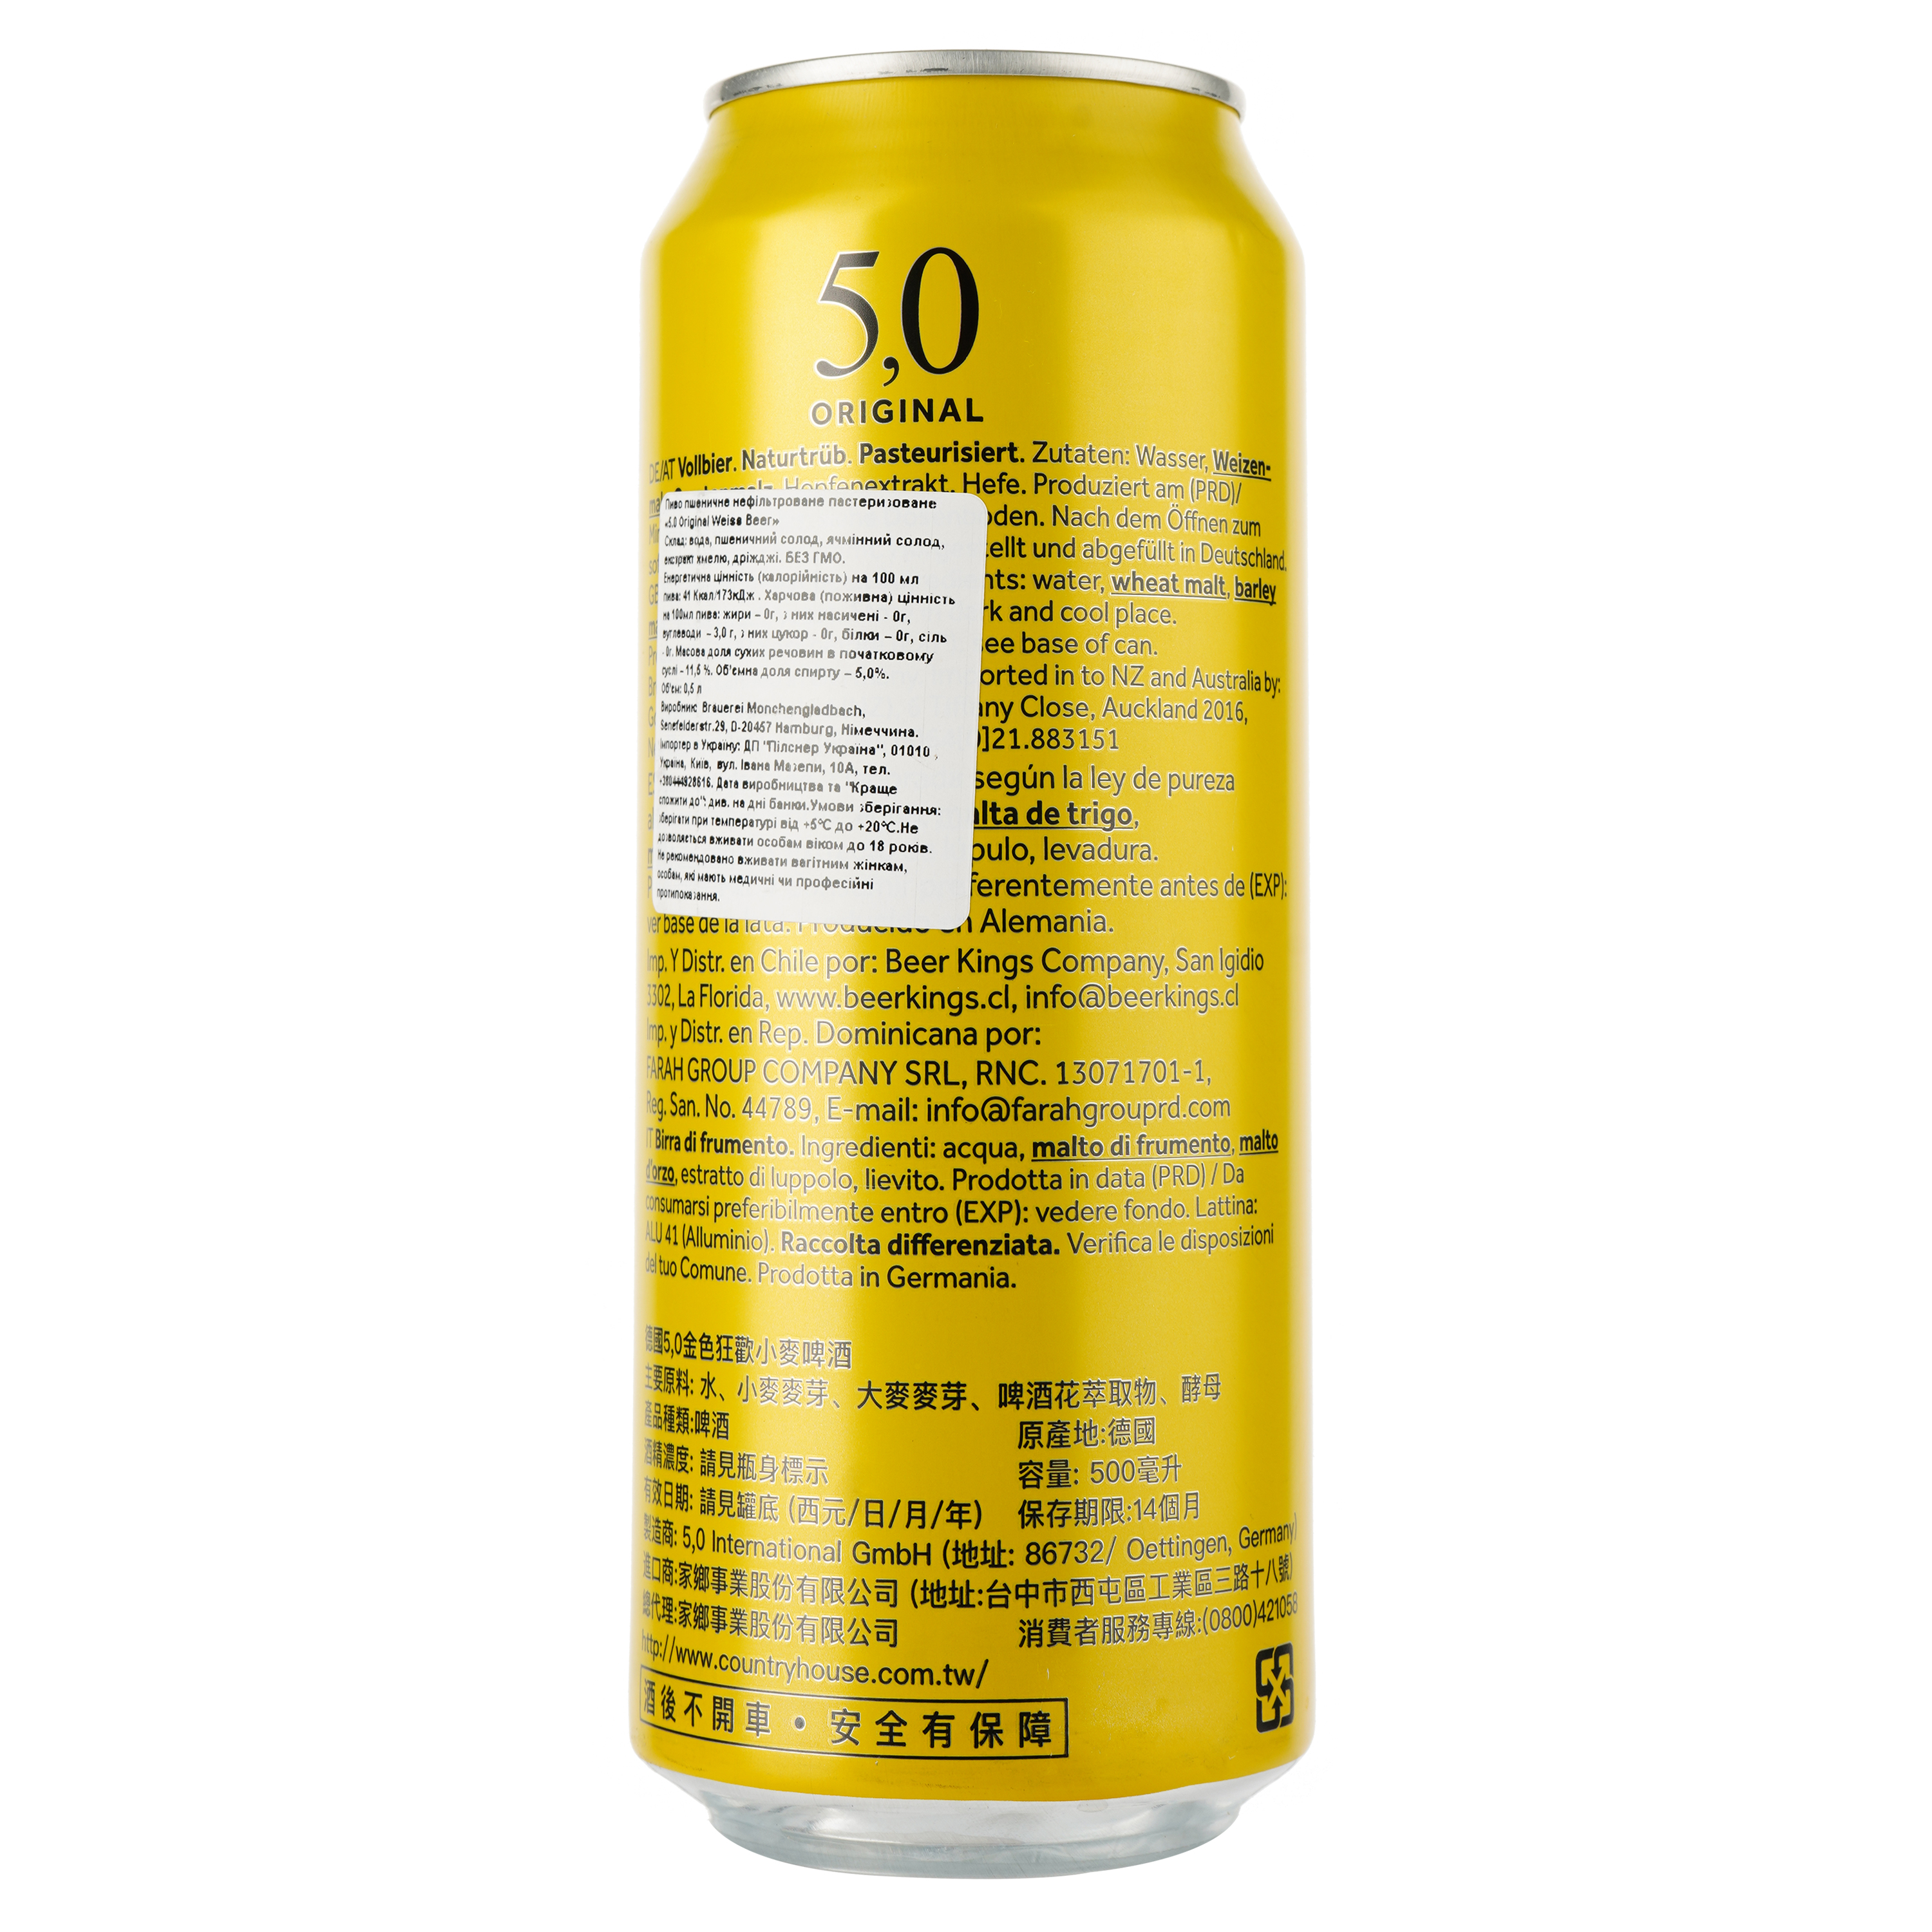 Пиво 5,0 Original Weiss Beer, світле, нефільтроване, 5%, з/б, 0,5 л - фото 2